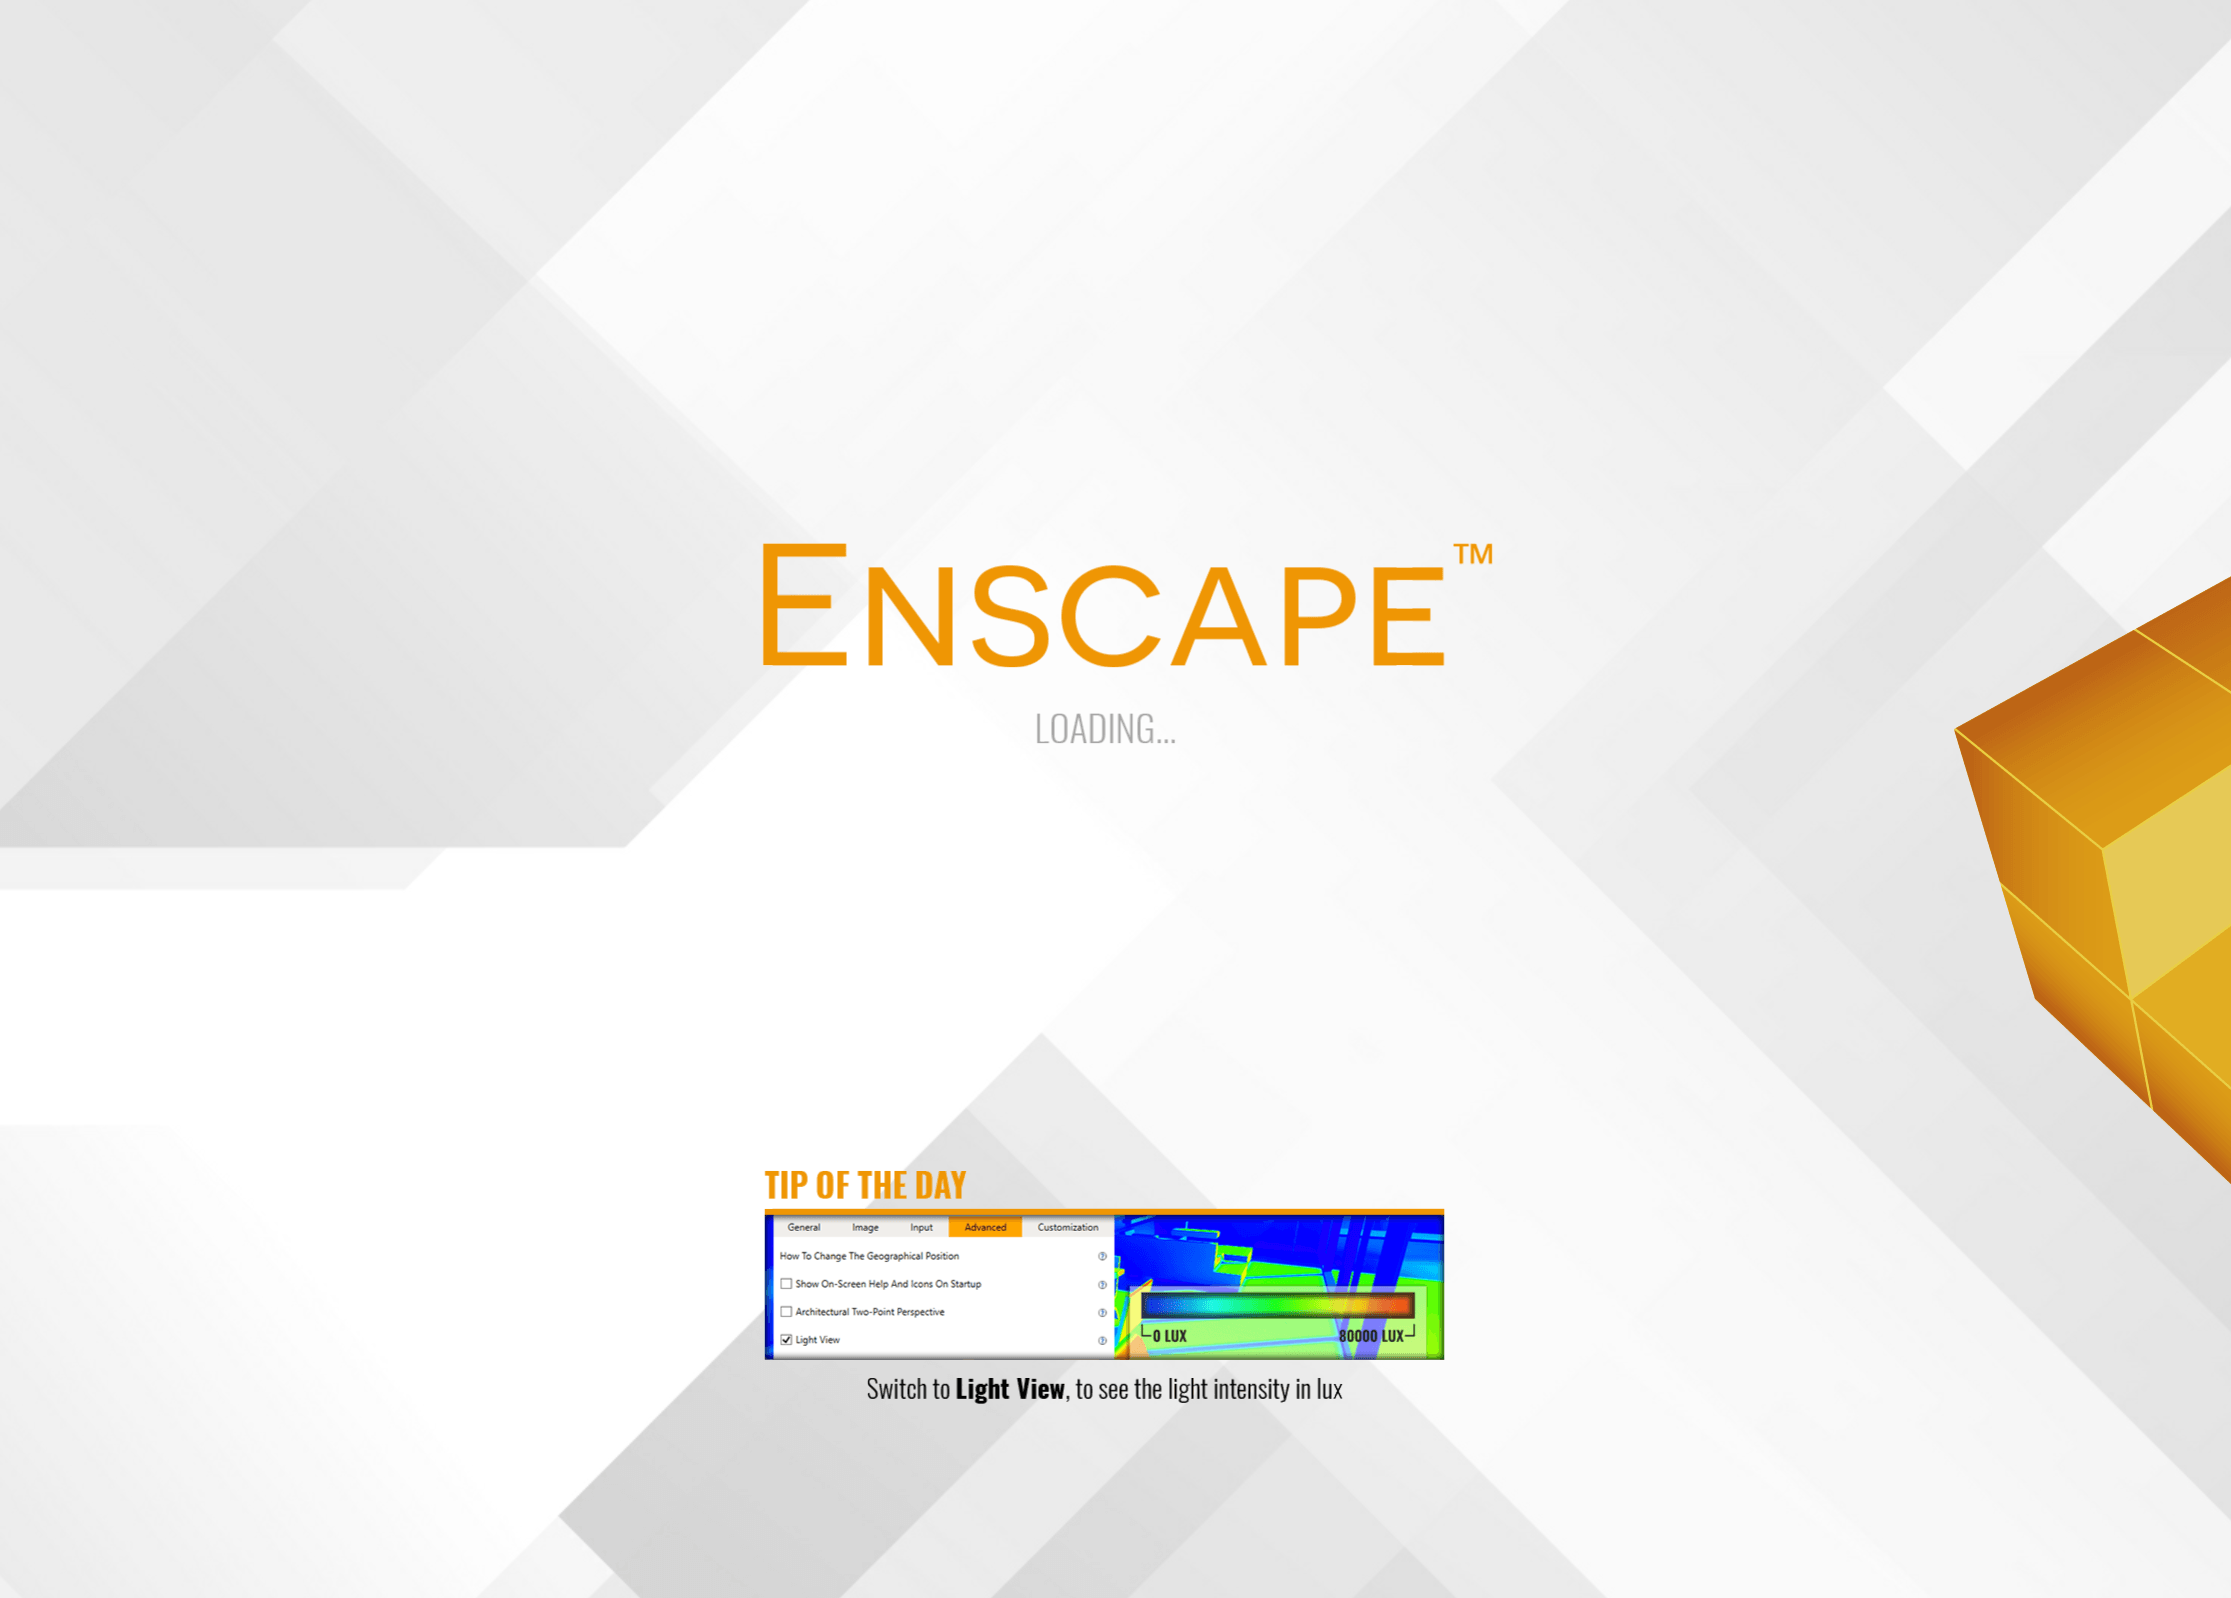 Enscape Logo - Failed to Load Enscape for SketchUp - SketchUp - Enscape Community Forum